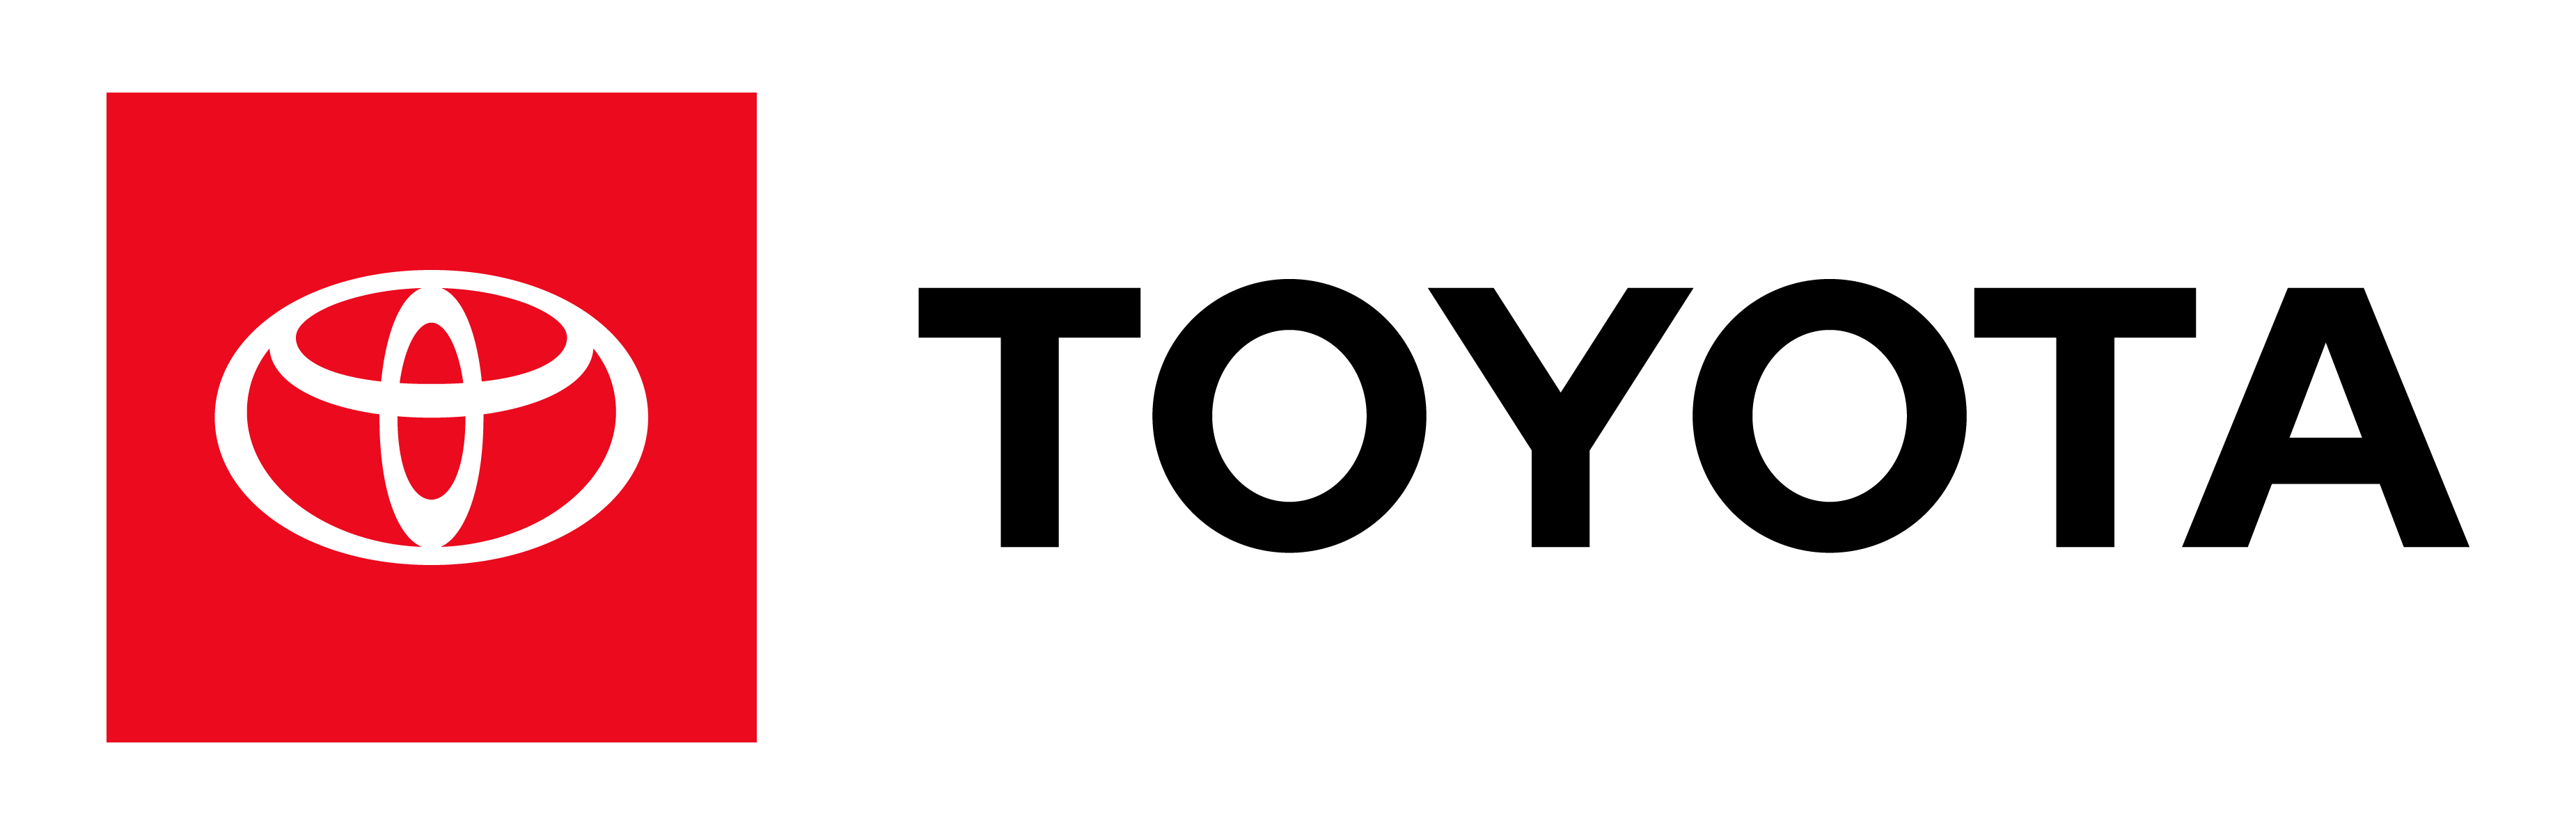 toyota-logo-2019-3700x1200-1.png